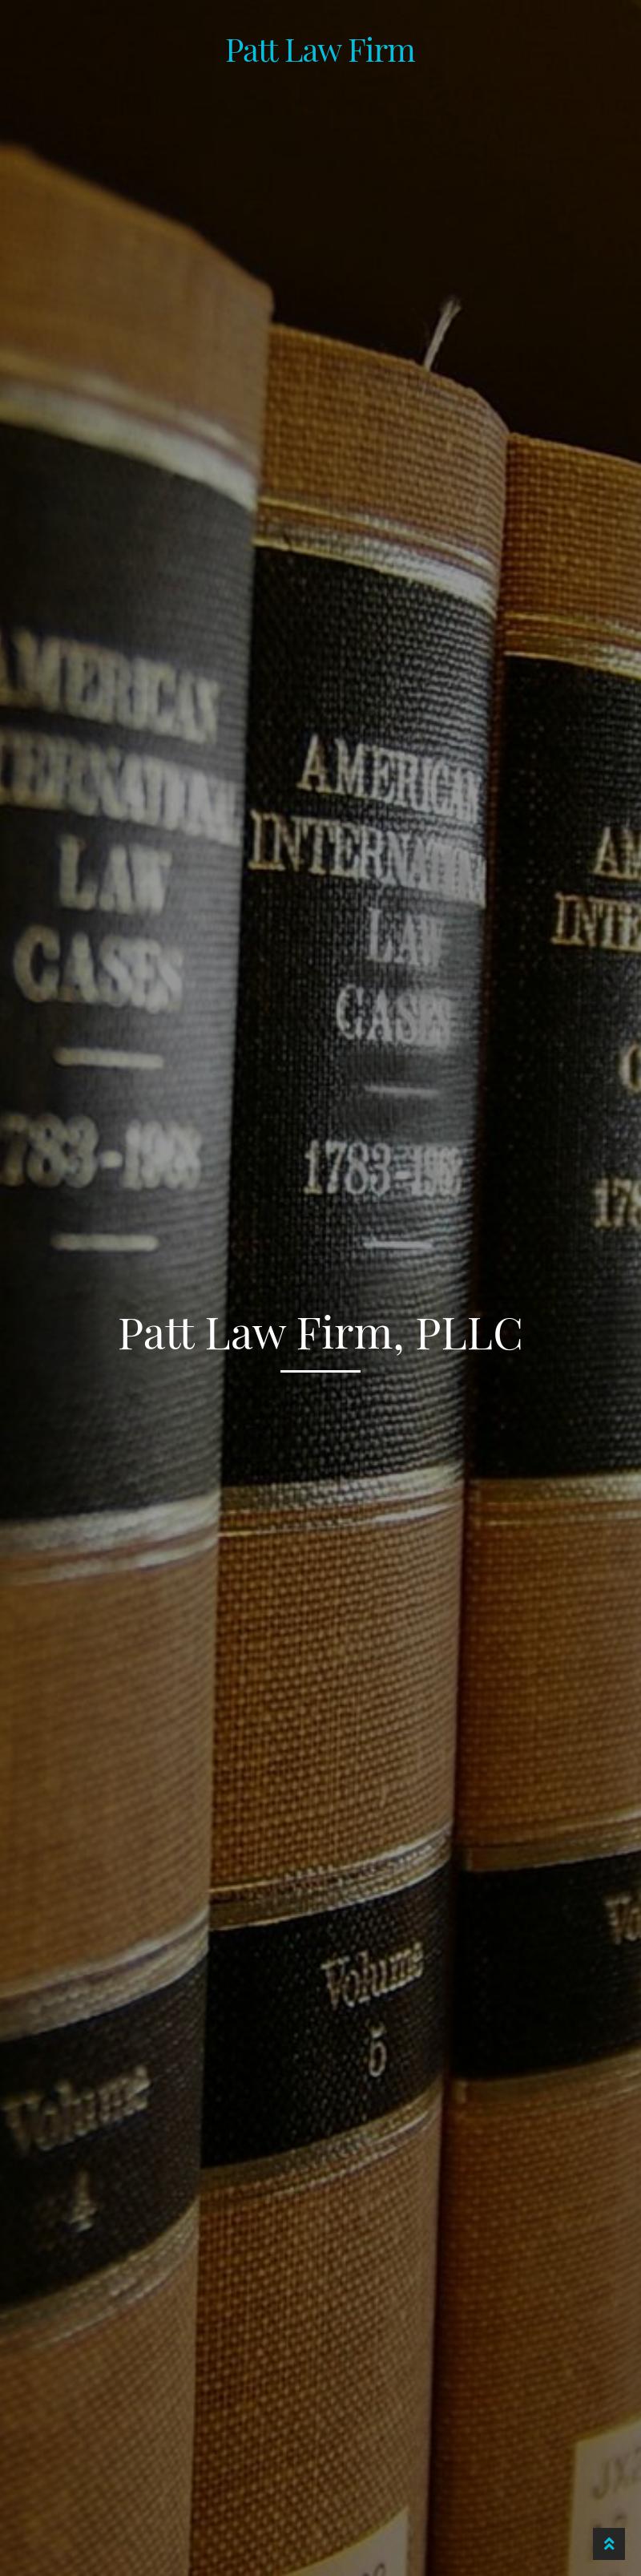 Patt Law Firm PLLC - Ridgeland MS Lawyers